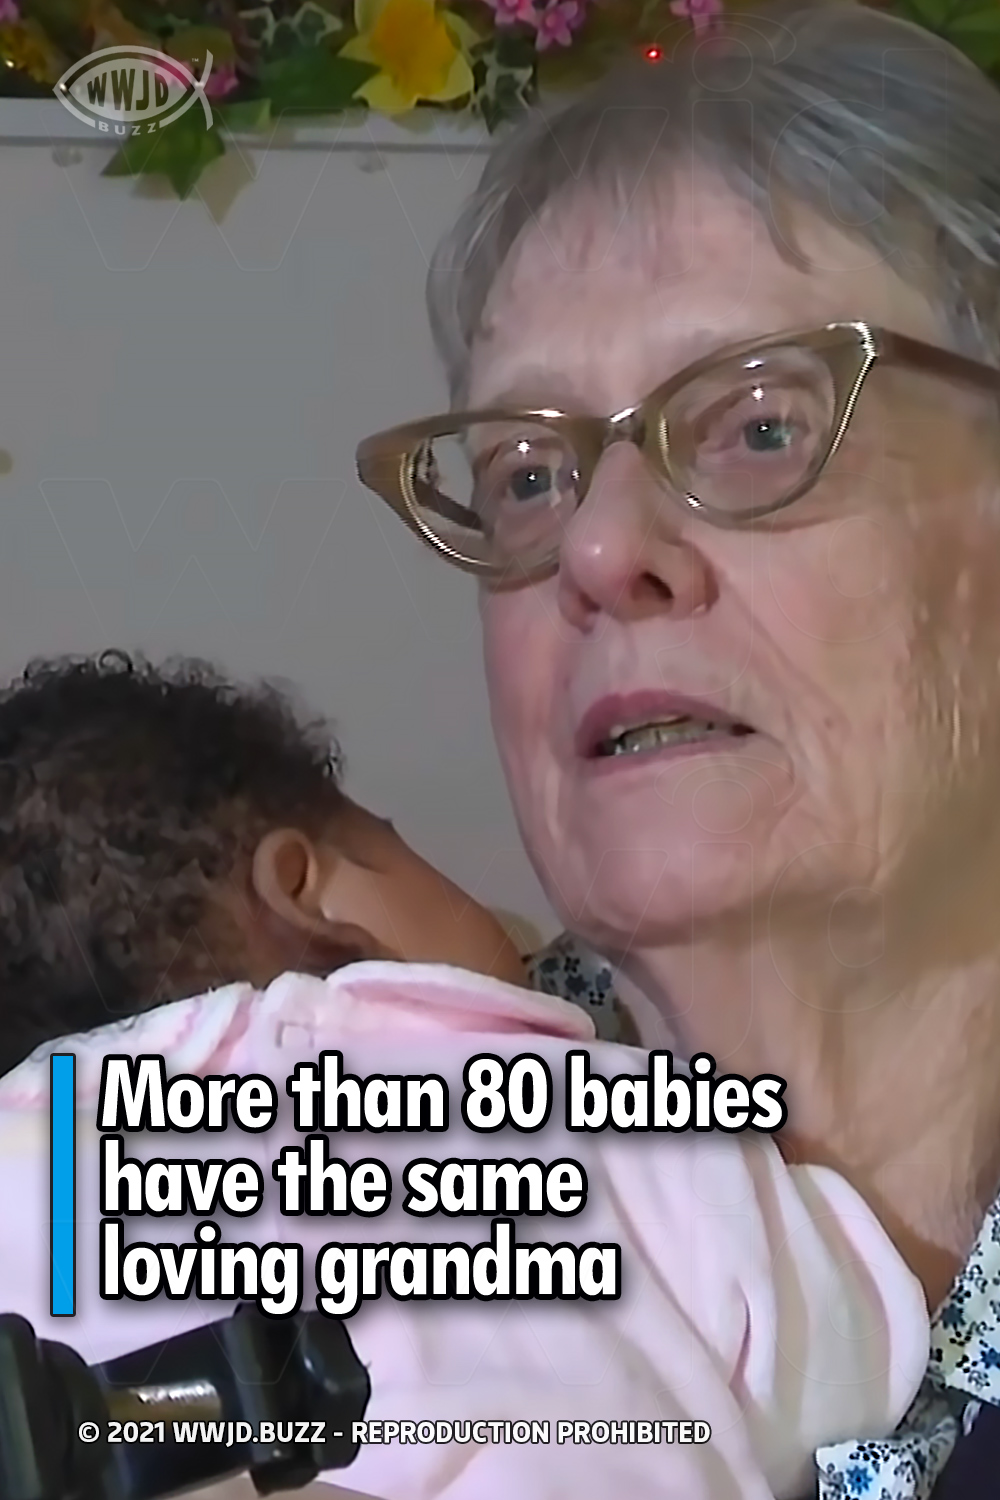 More than 80 babies have the same loving grandma